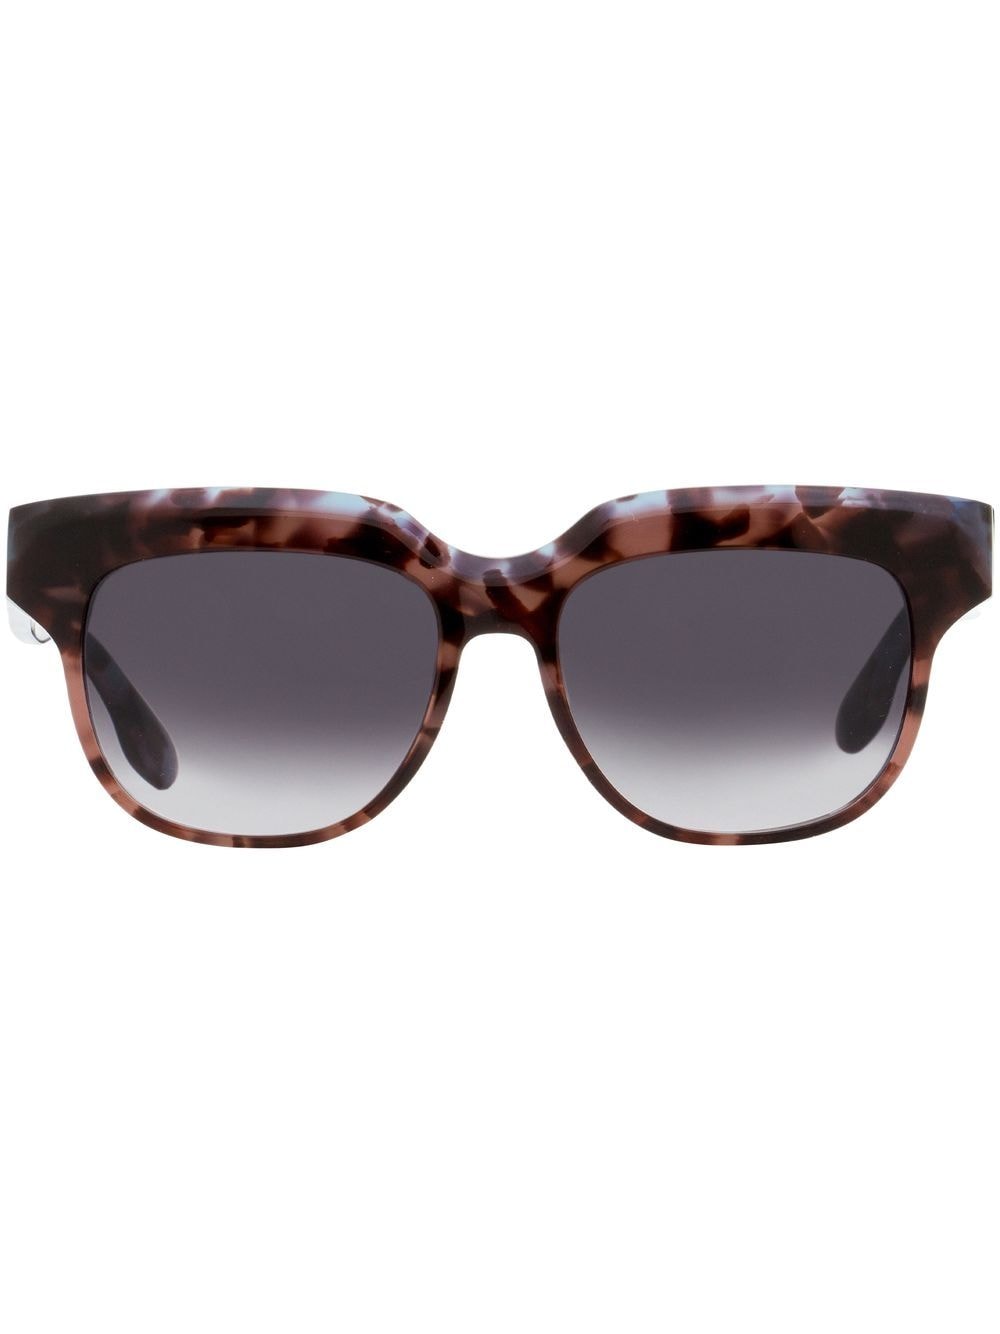 Victoria Beckham Eyewear VB604S round-frame sunglasses - Brown